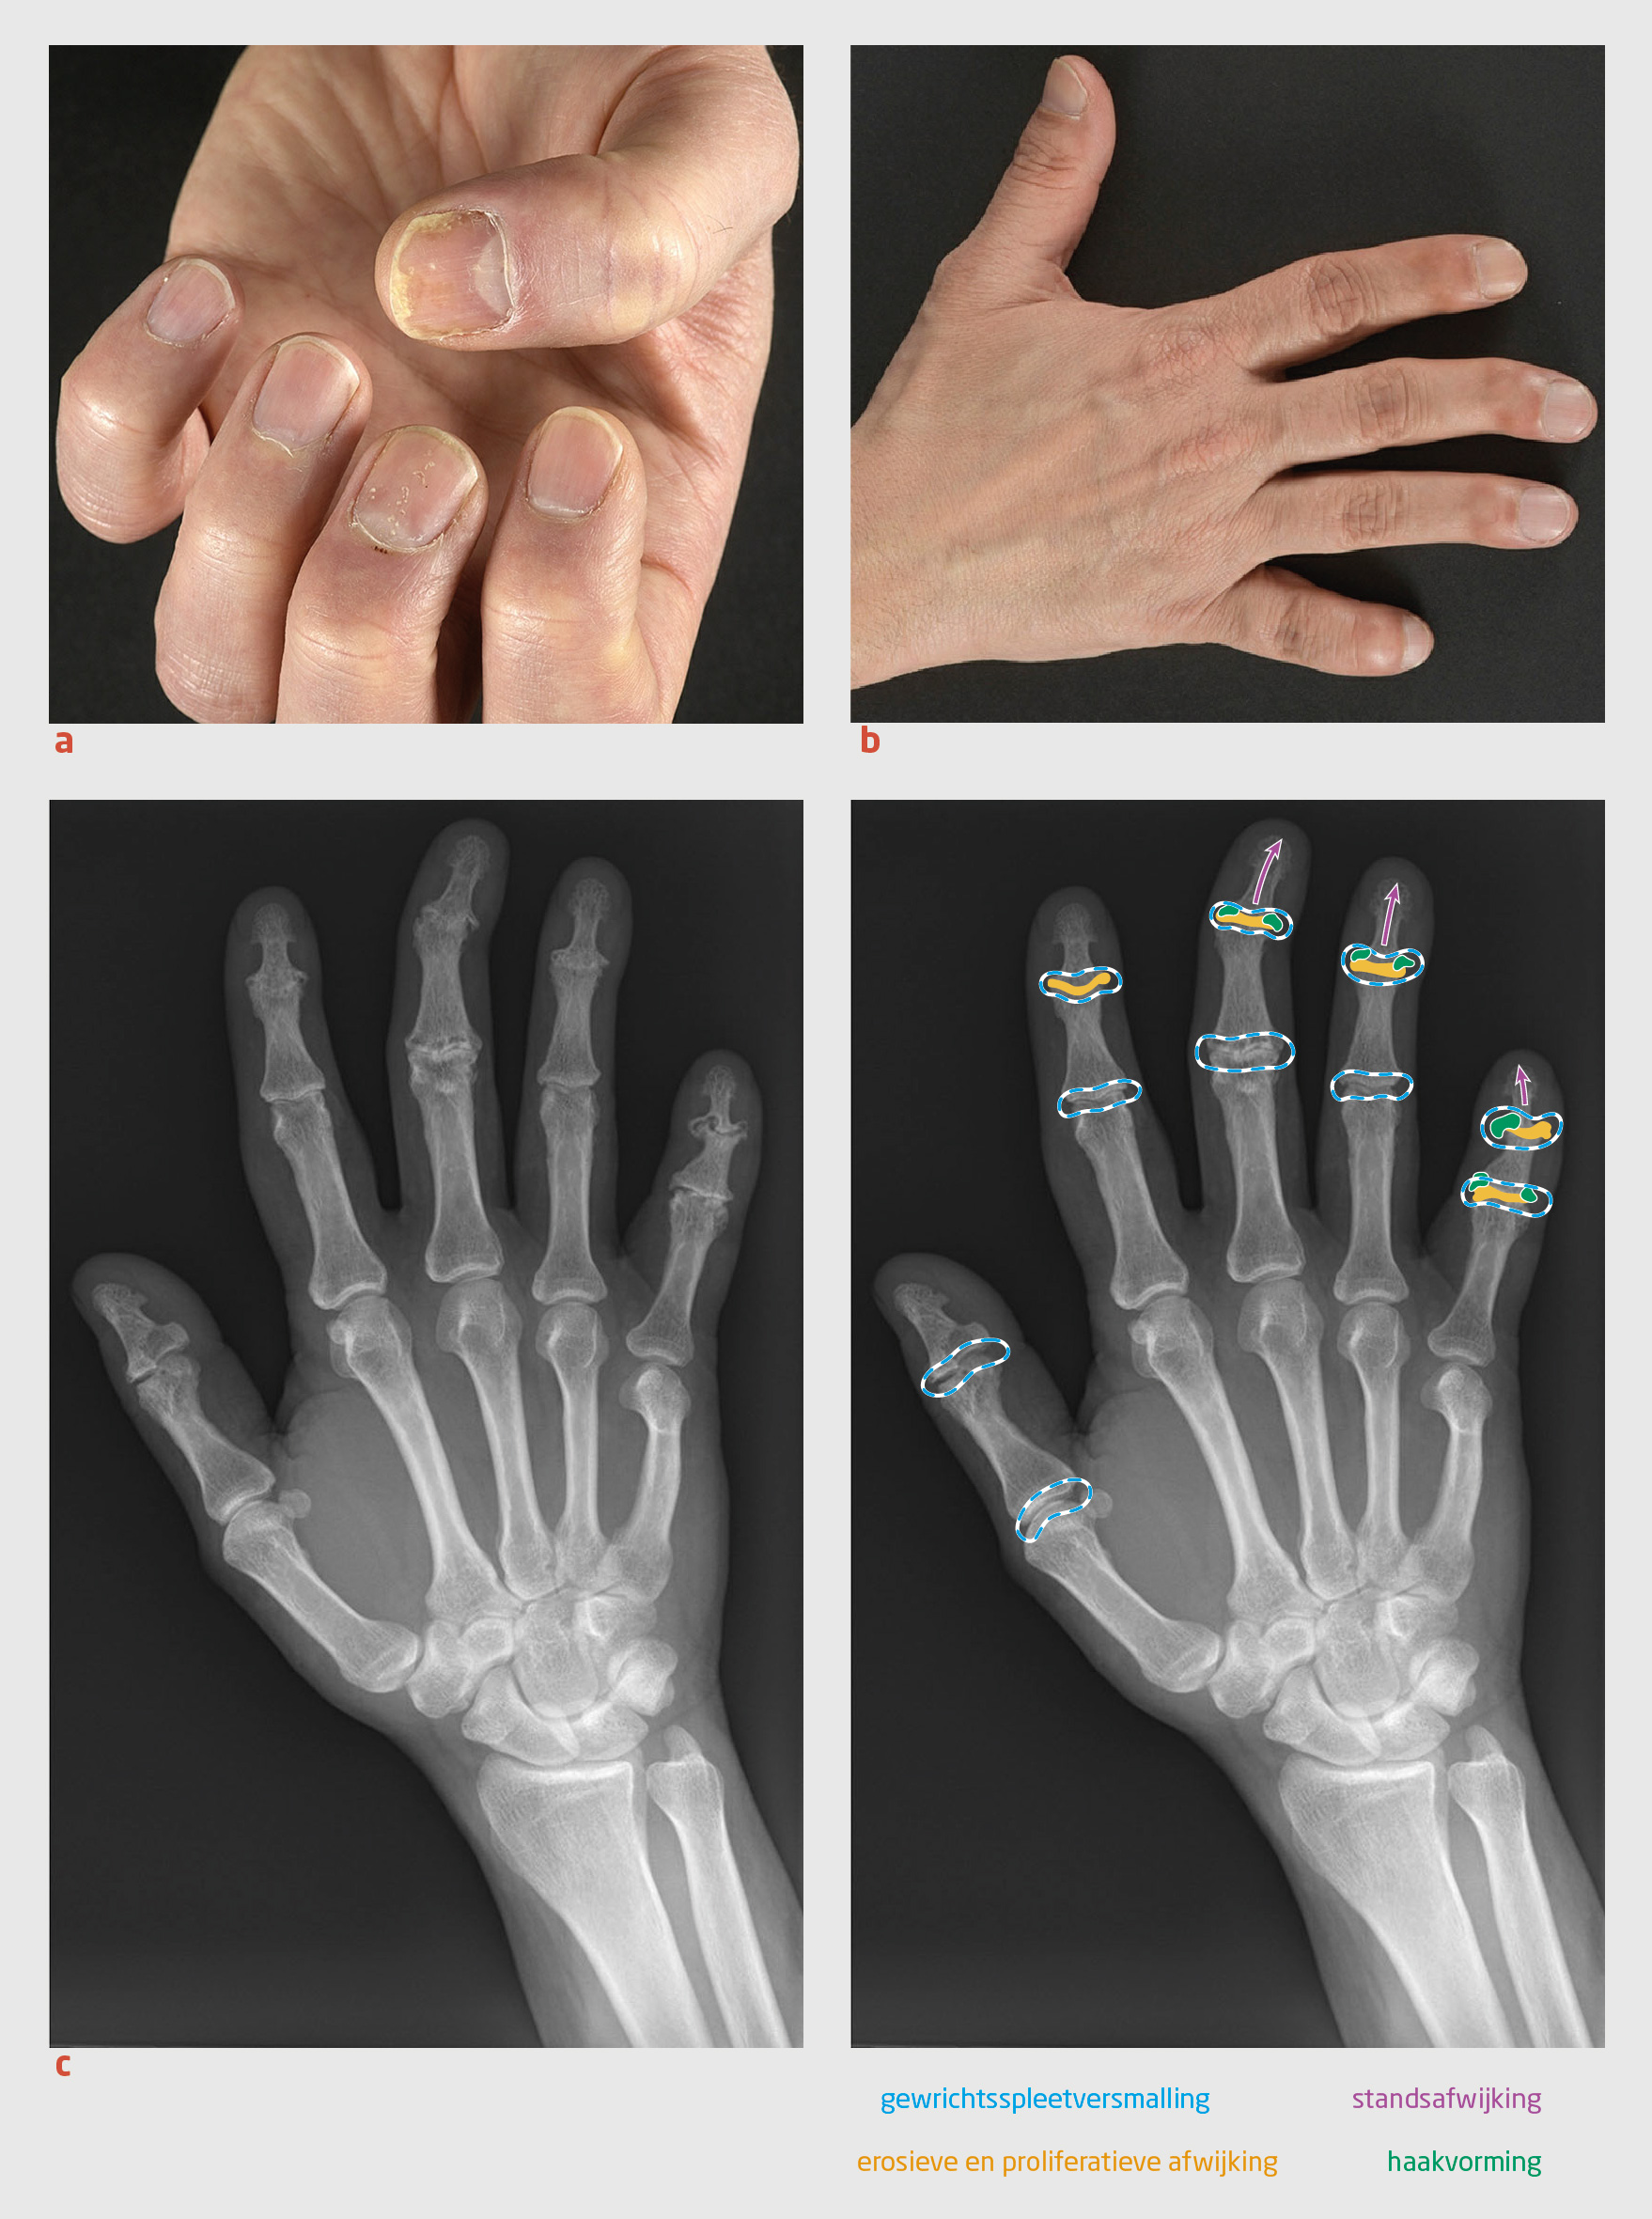 Ameliorarea artritei reumatoide